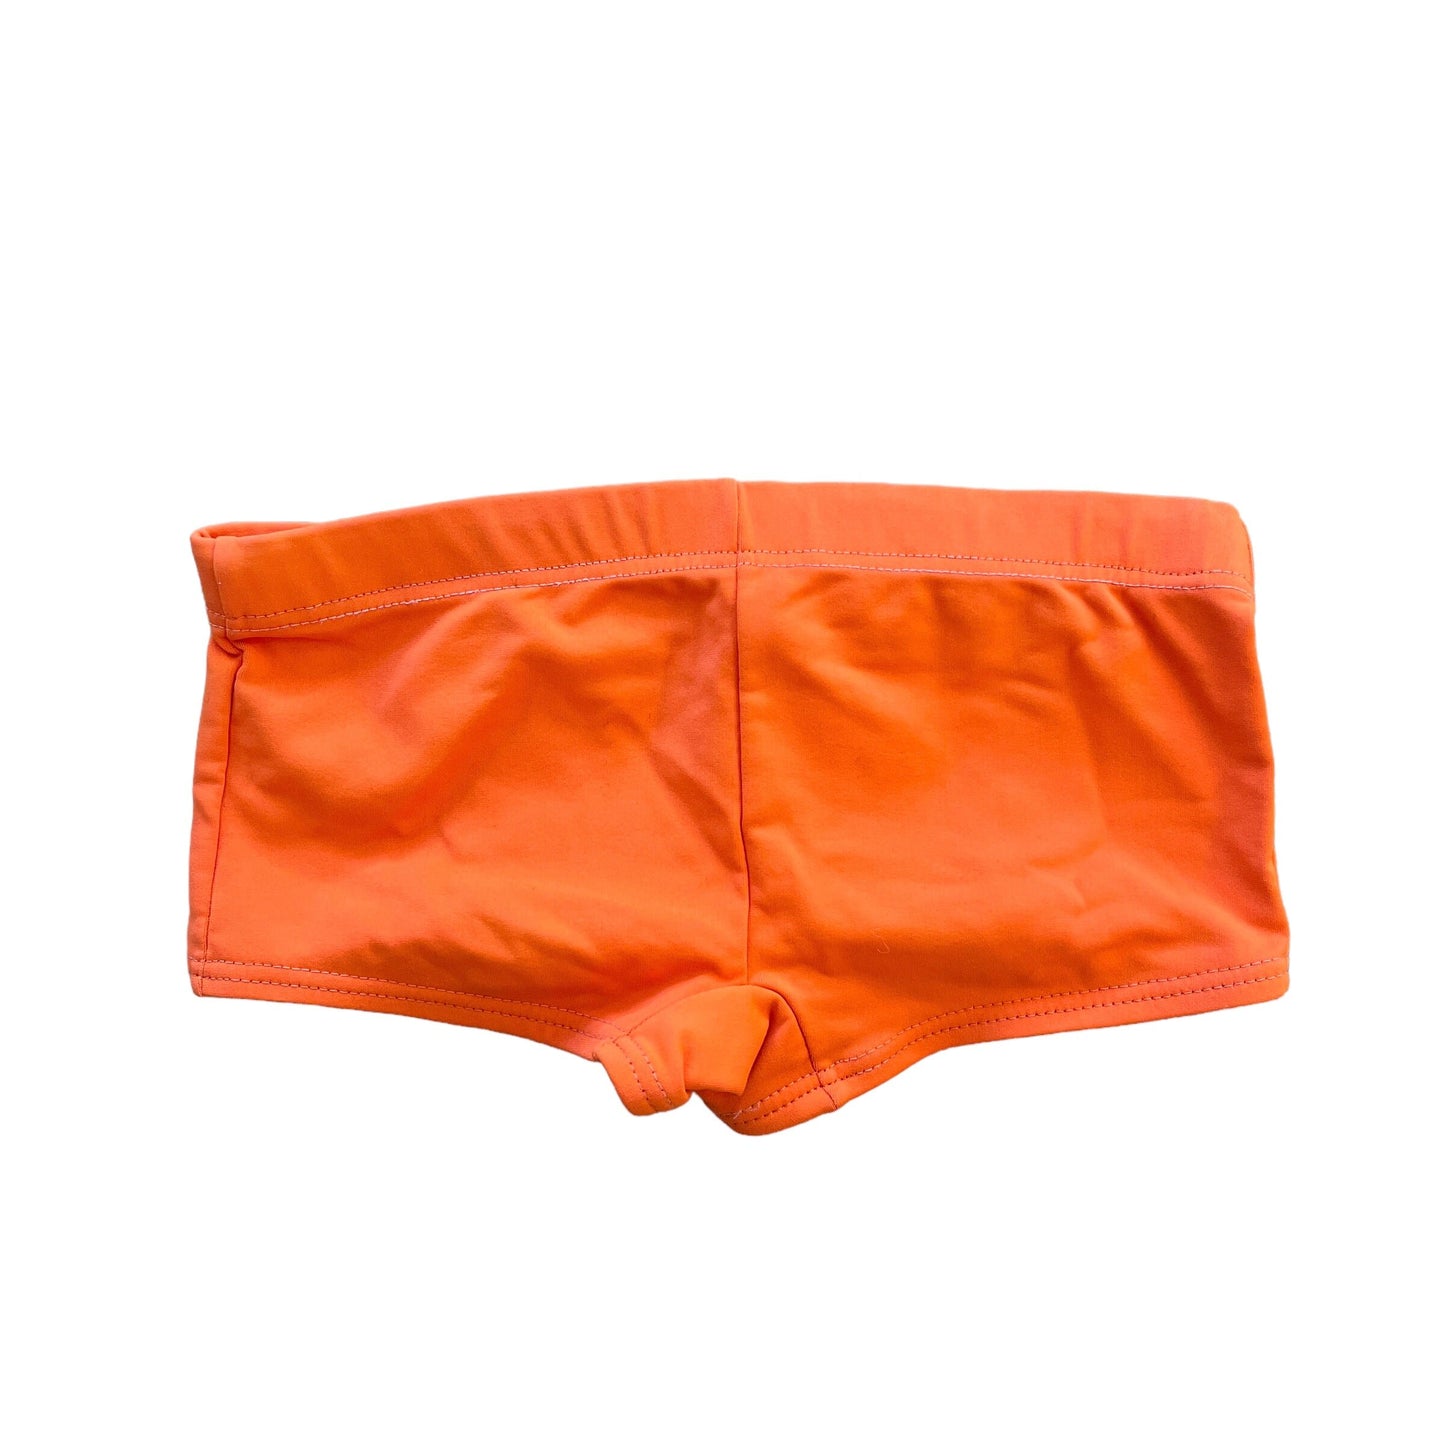 Vintage 70's Orange Swimming Trunks / Shorts 6-8Y